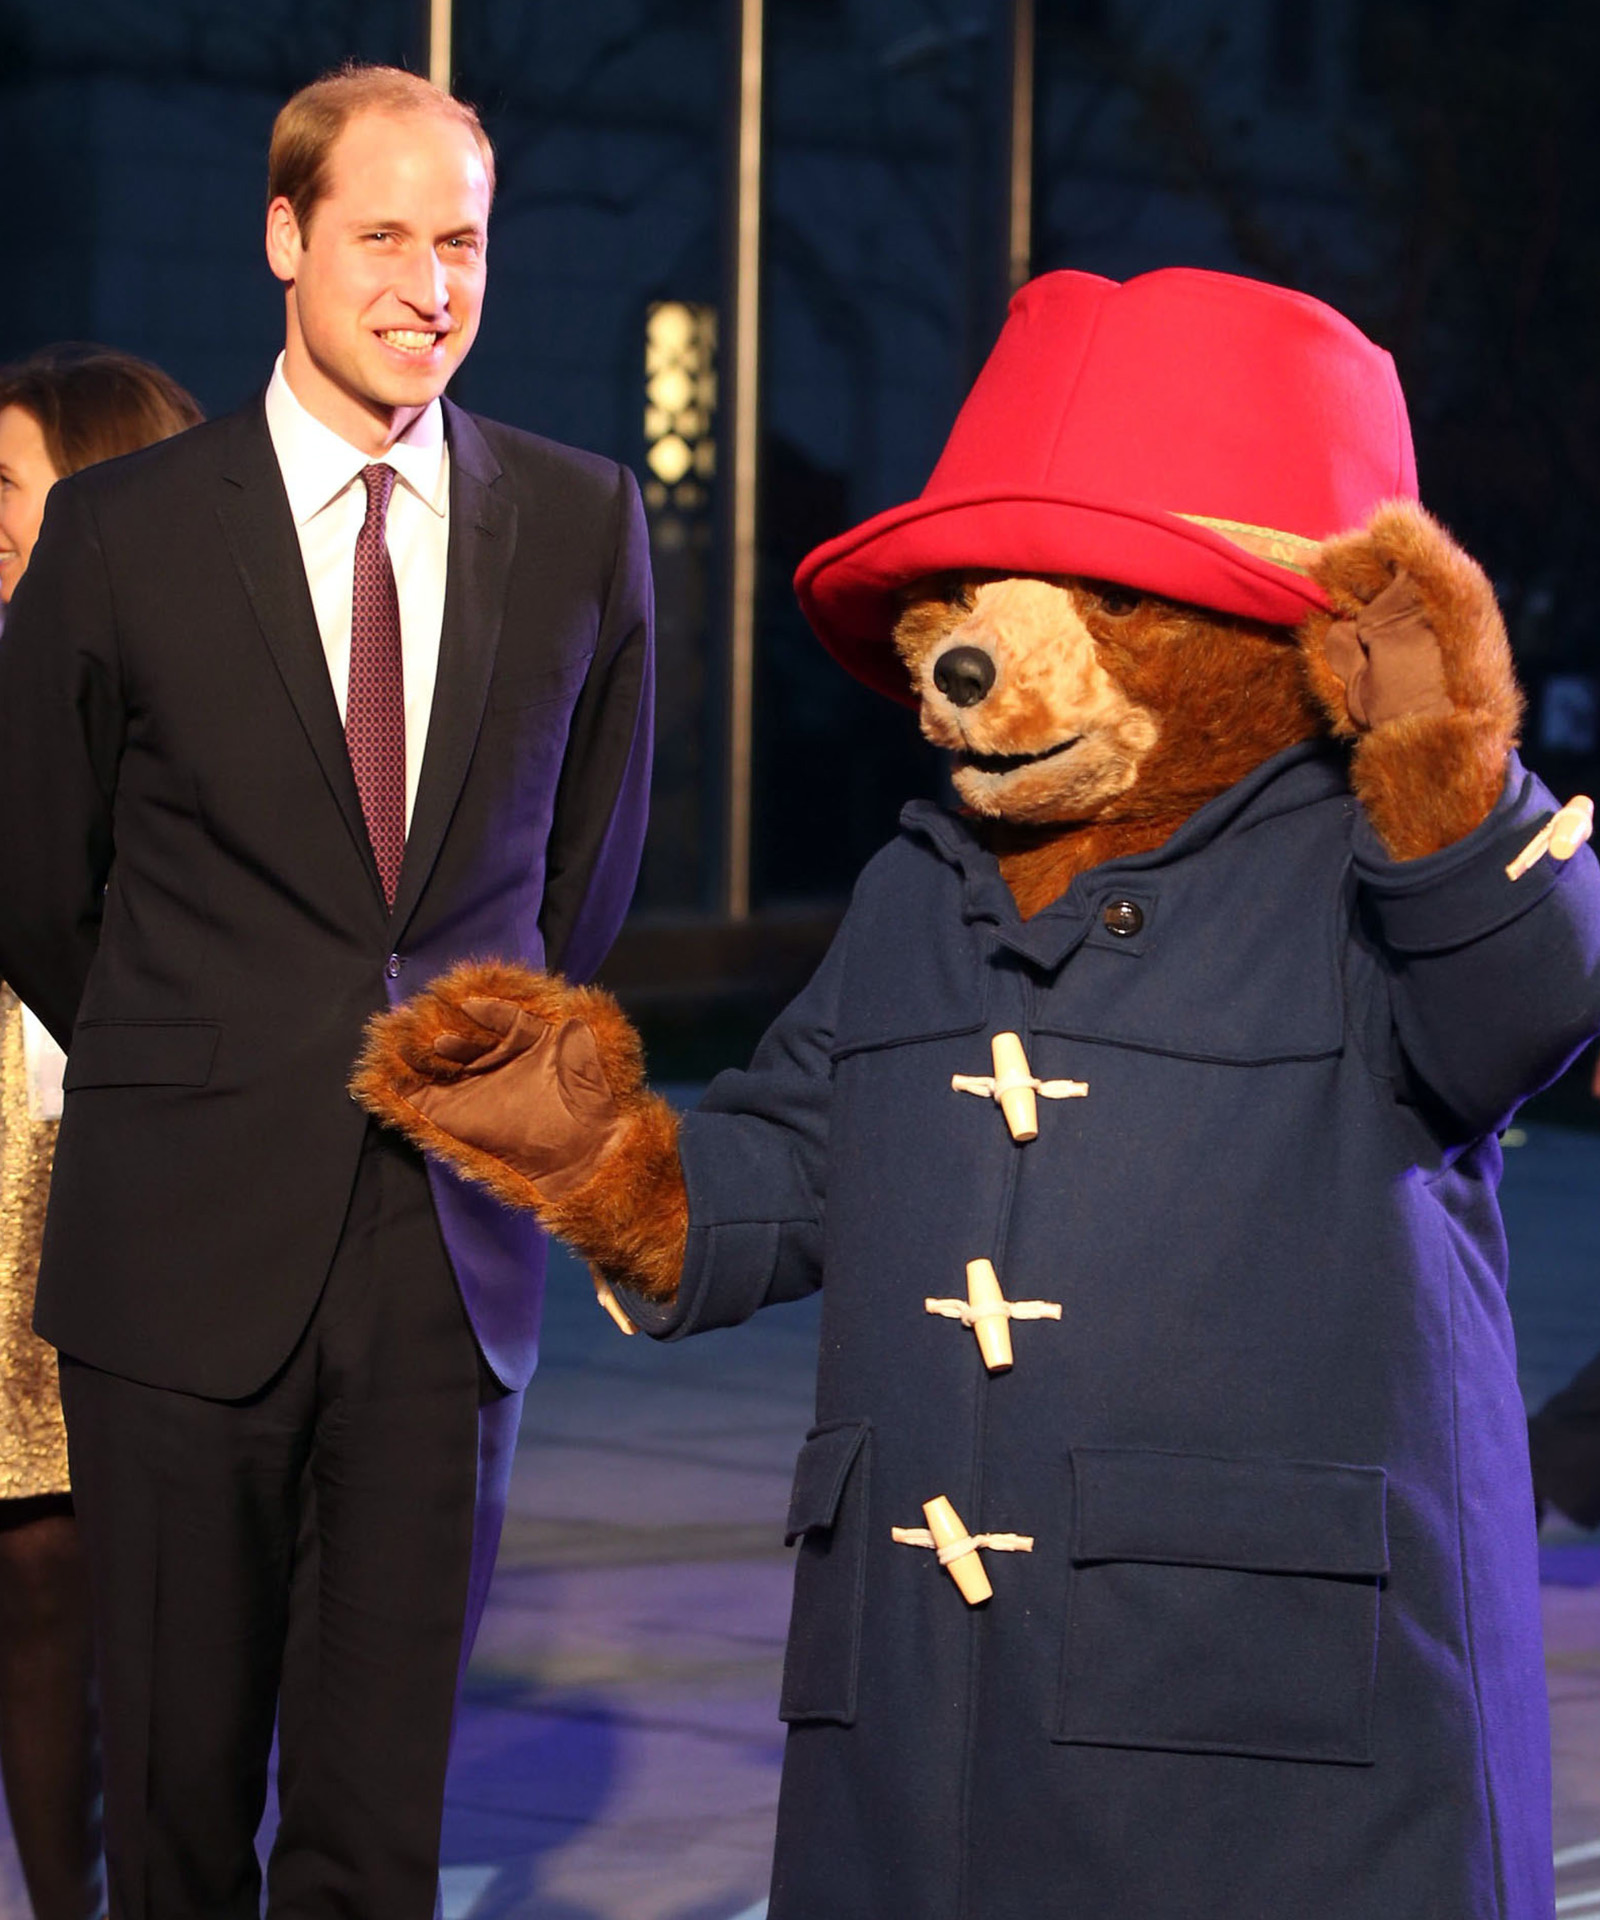 Prince William and Paddington bear